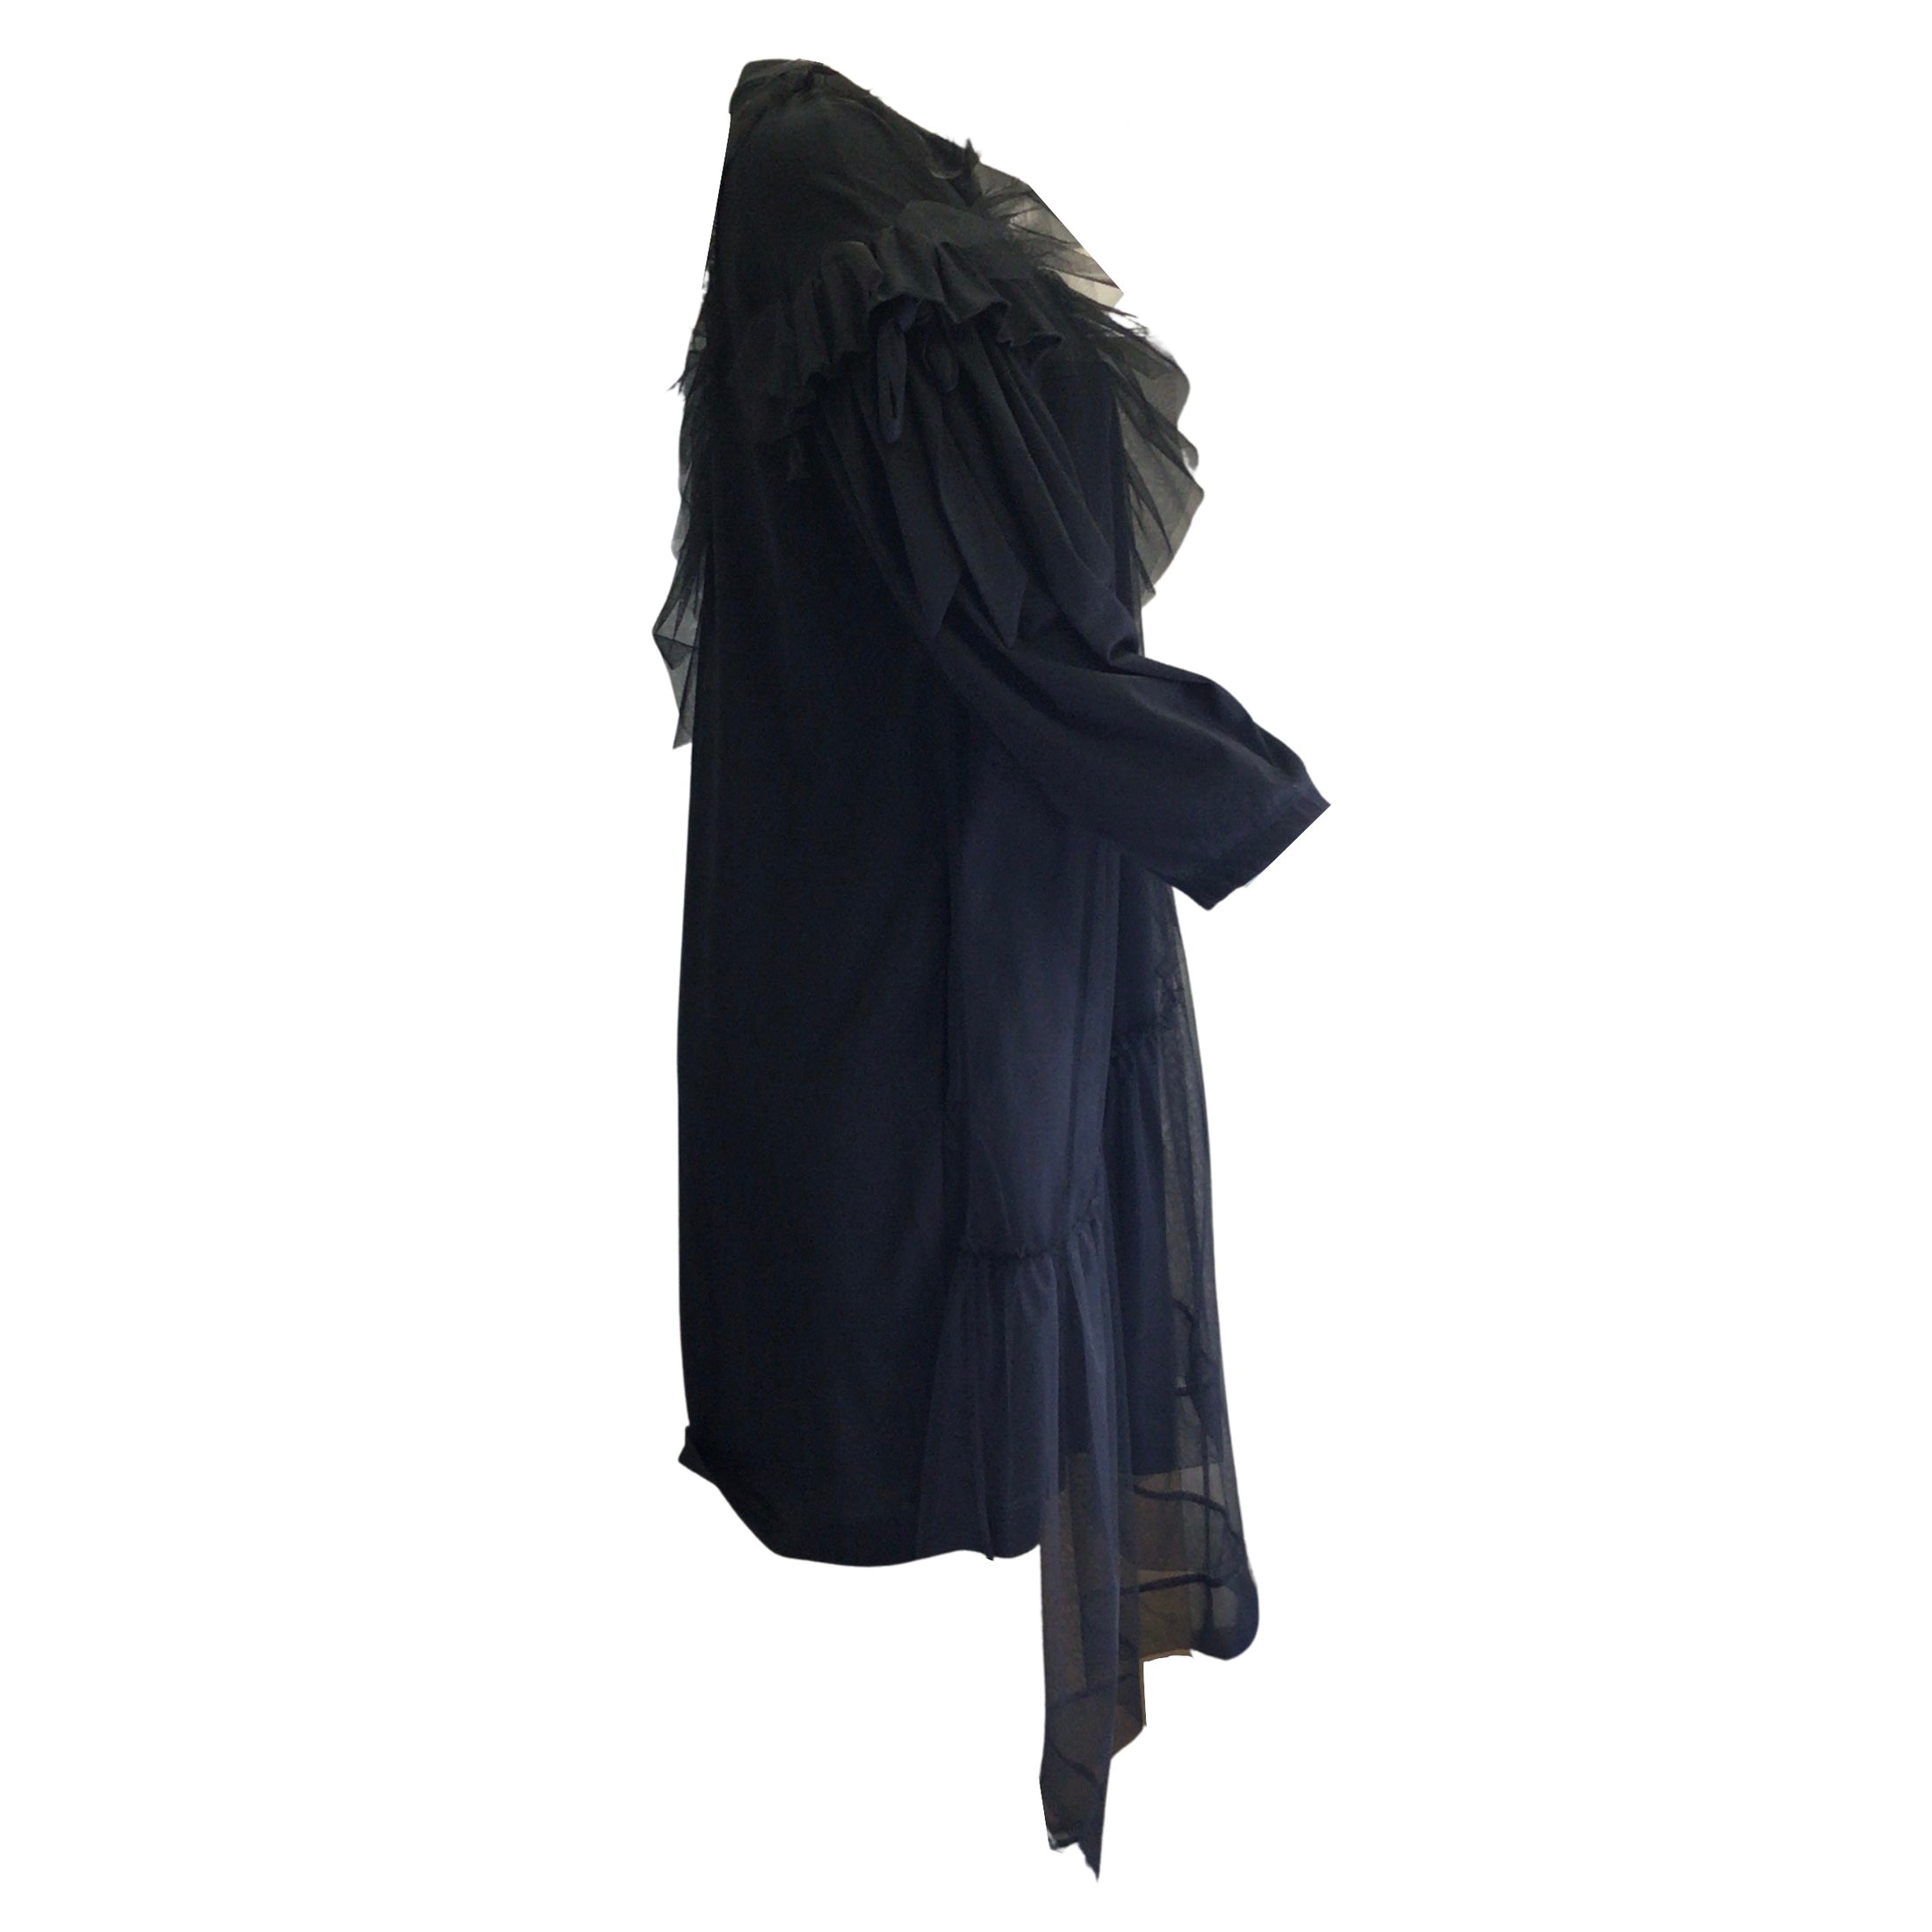 Simone Rocha Black Ruffled Tulle Detail Cotton Dress